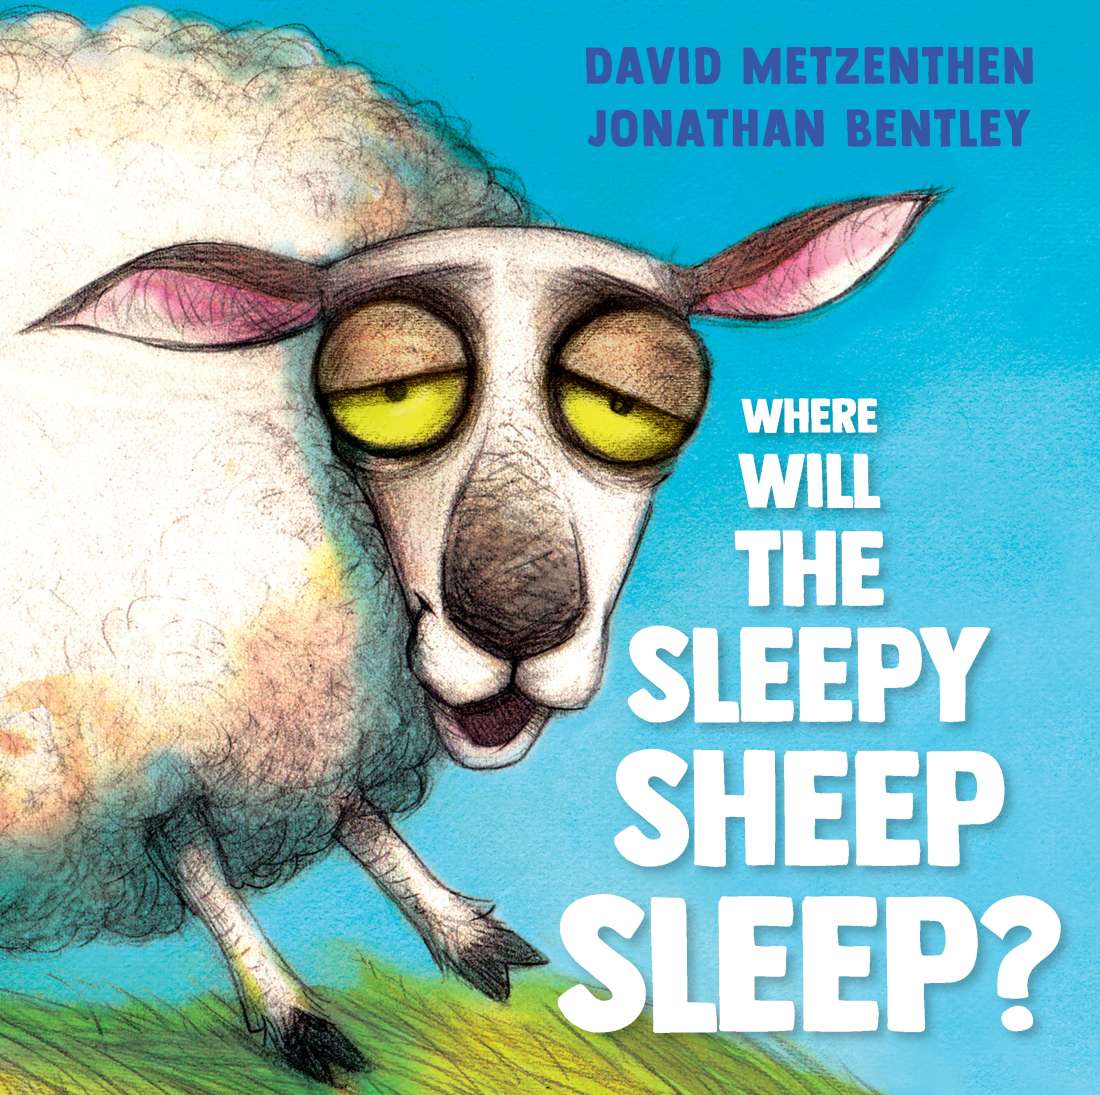 WHERE WILL THE SLEEPY SHEEP SLEEP?